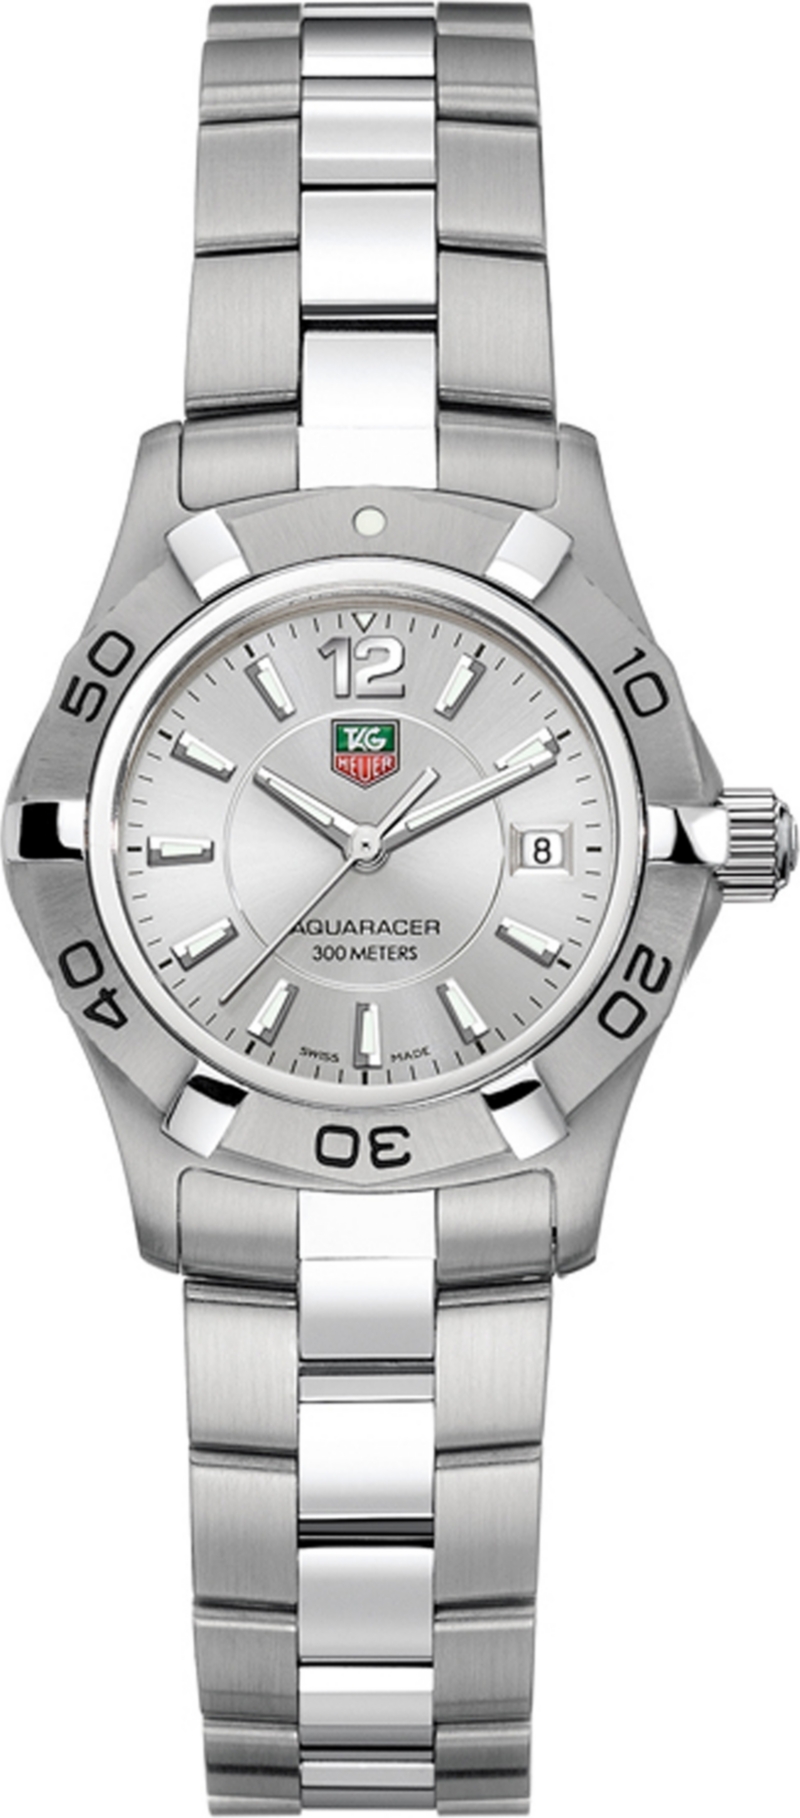 Aquaracer Lady steel bracelet watch   TAG HEUER   Luxury   Watches 